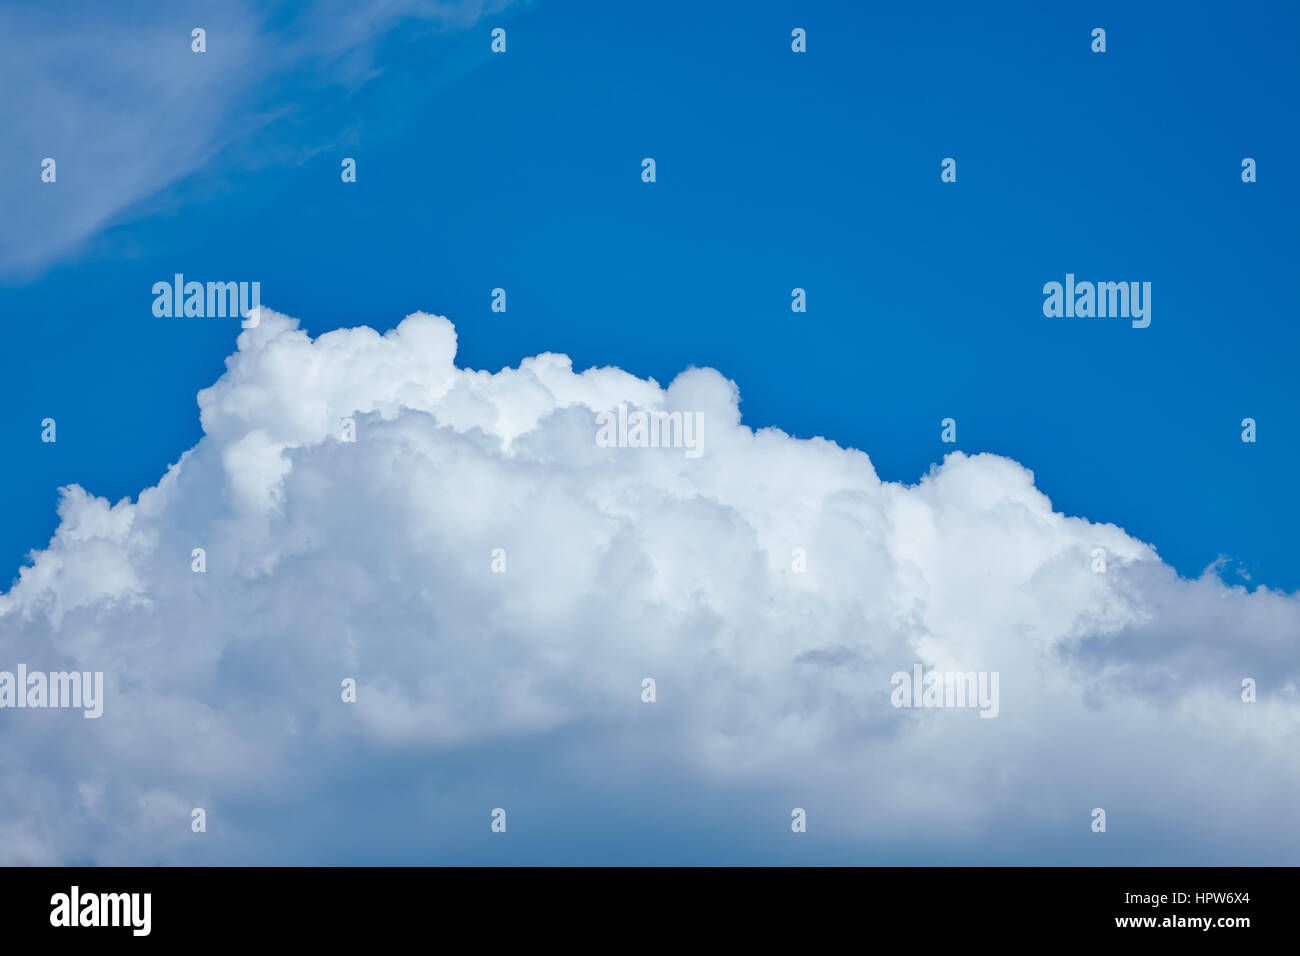 Soffice nuvola bianca coperchio in un cielo blu Foto Stock